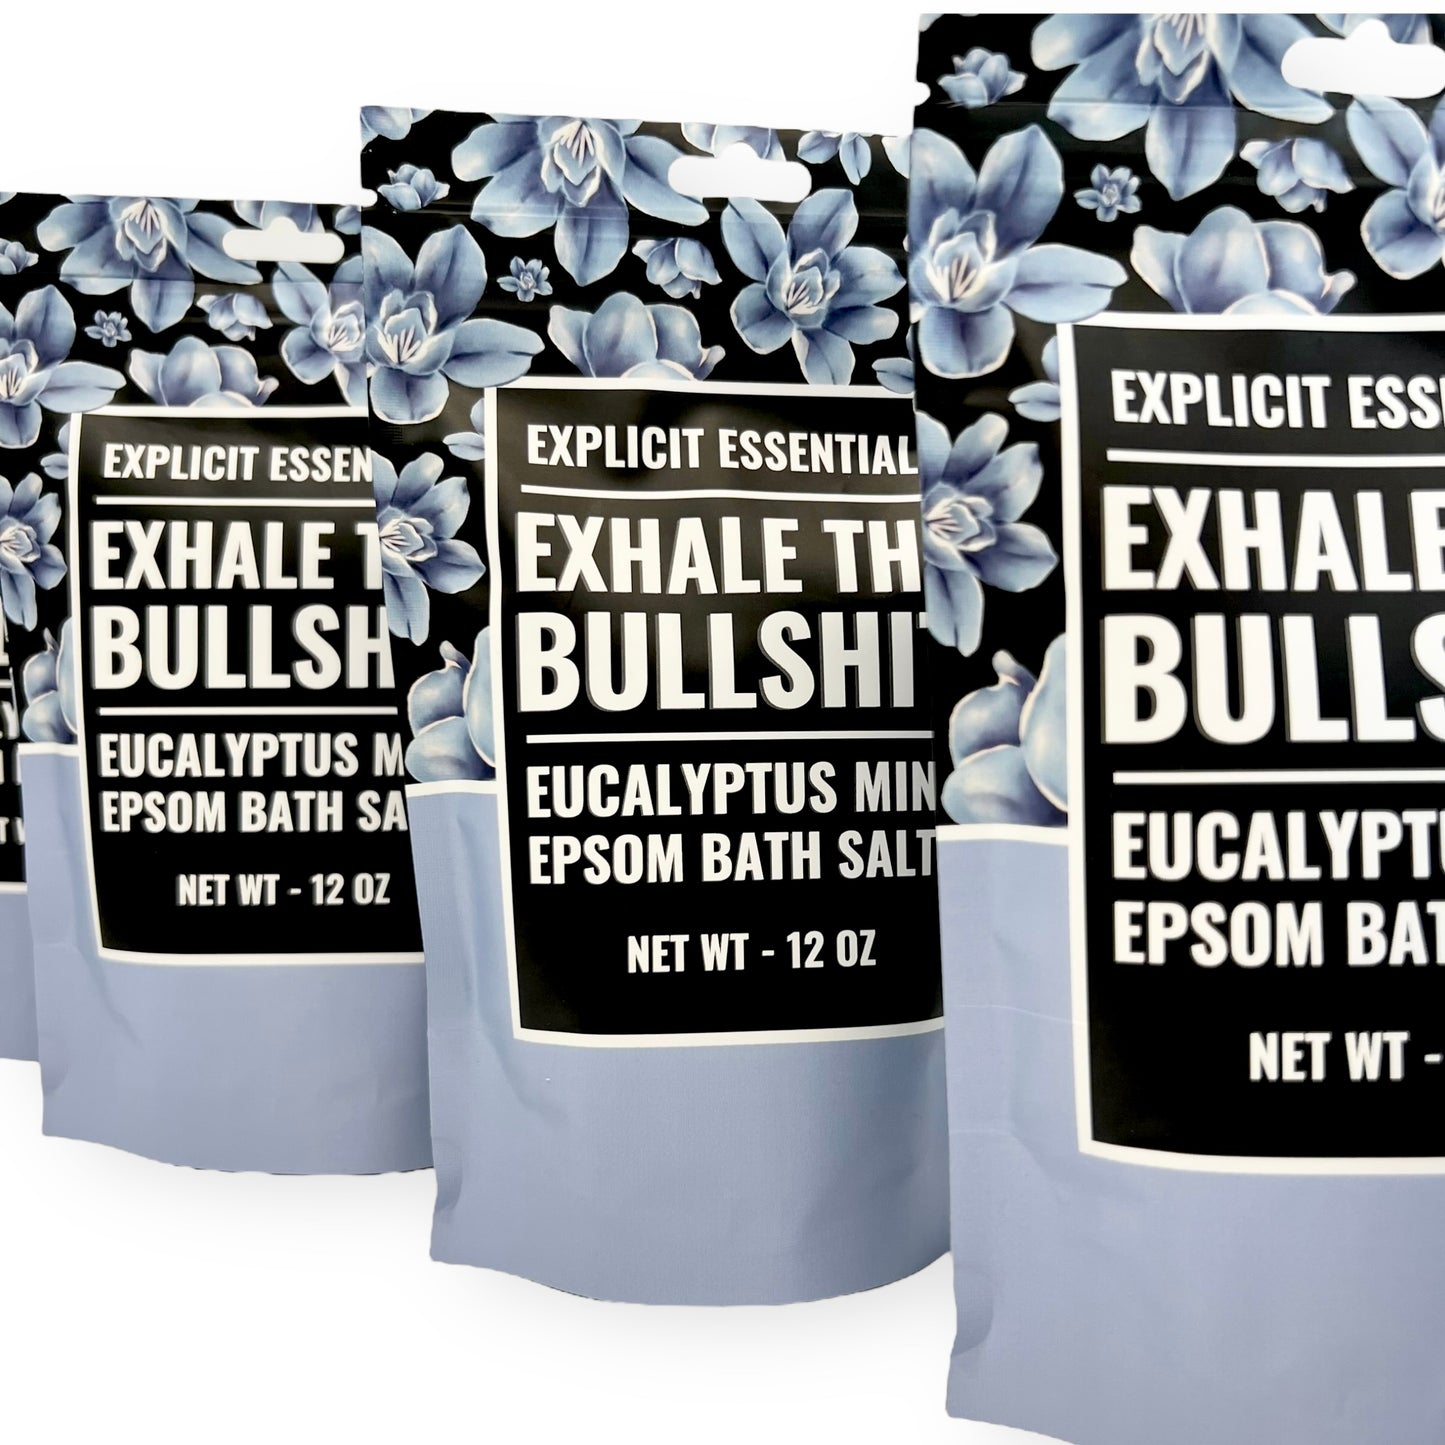 Exhale The Bullshit Bath Salts